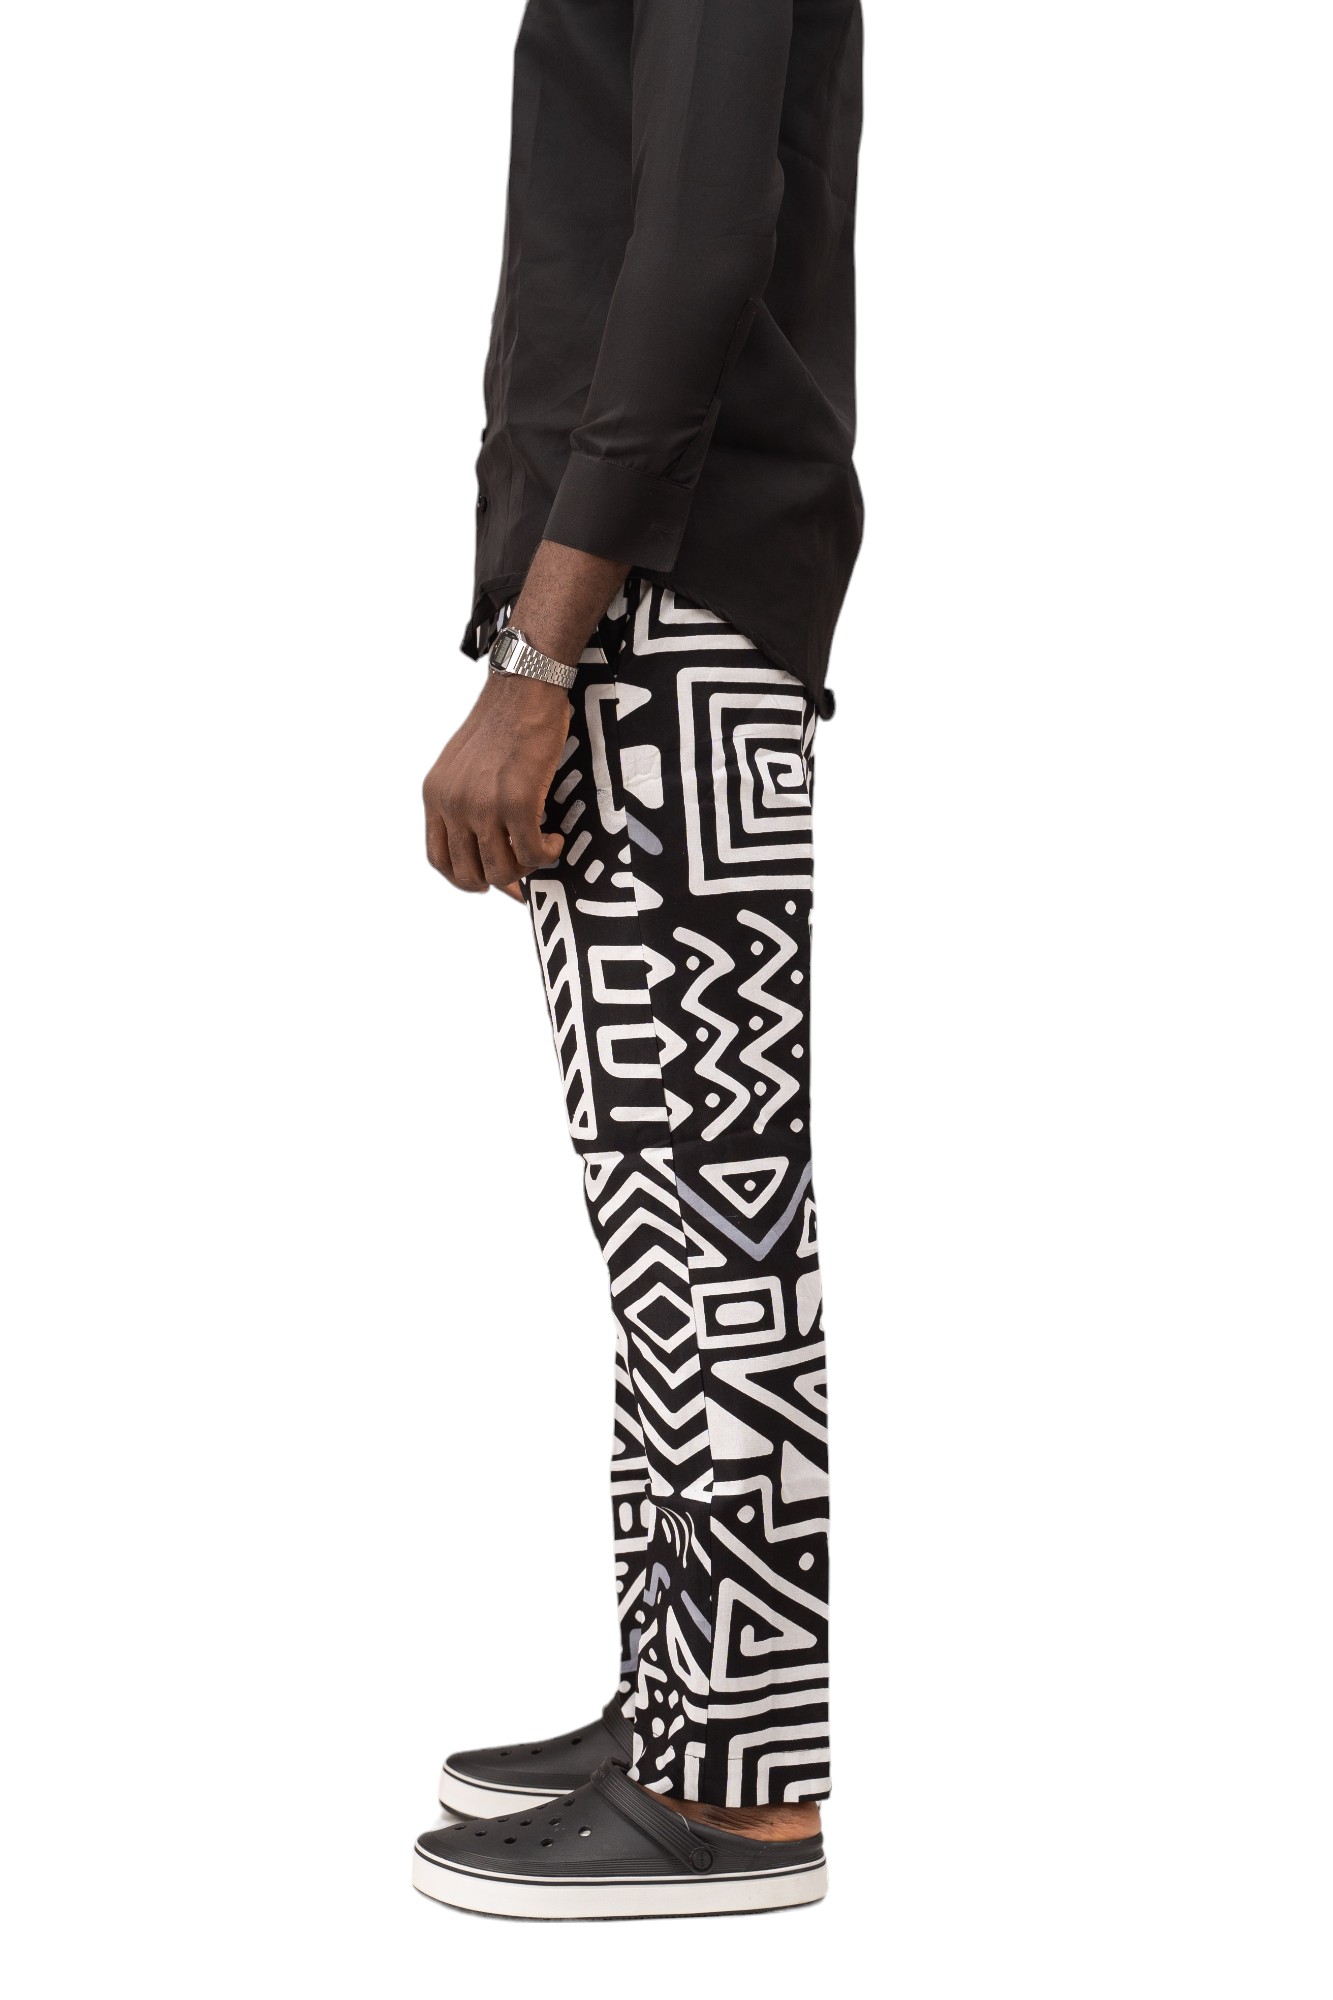 TETANURA Black and White Pattern Pants